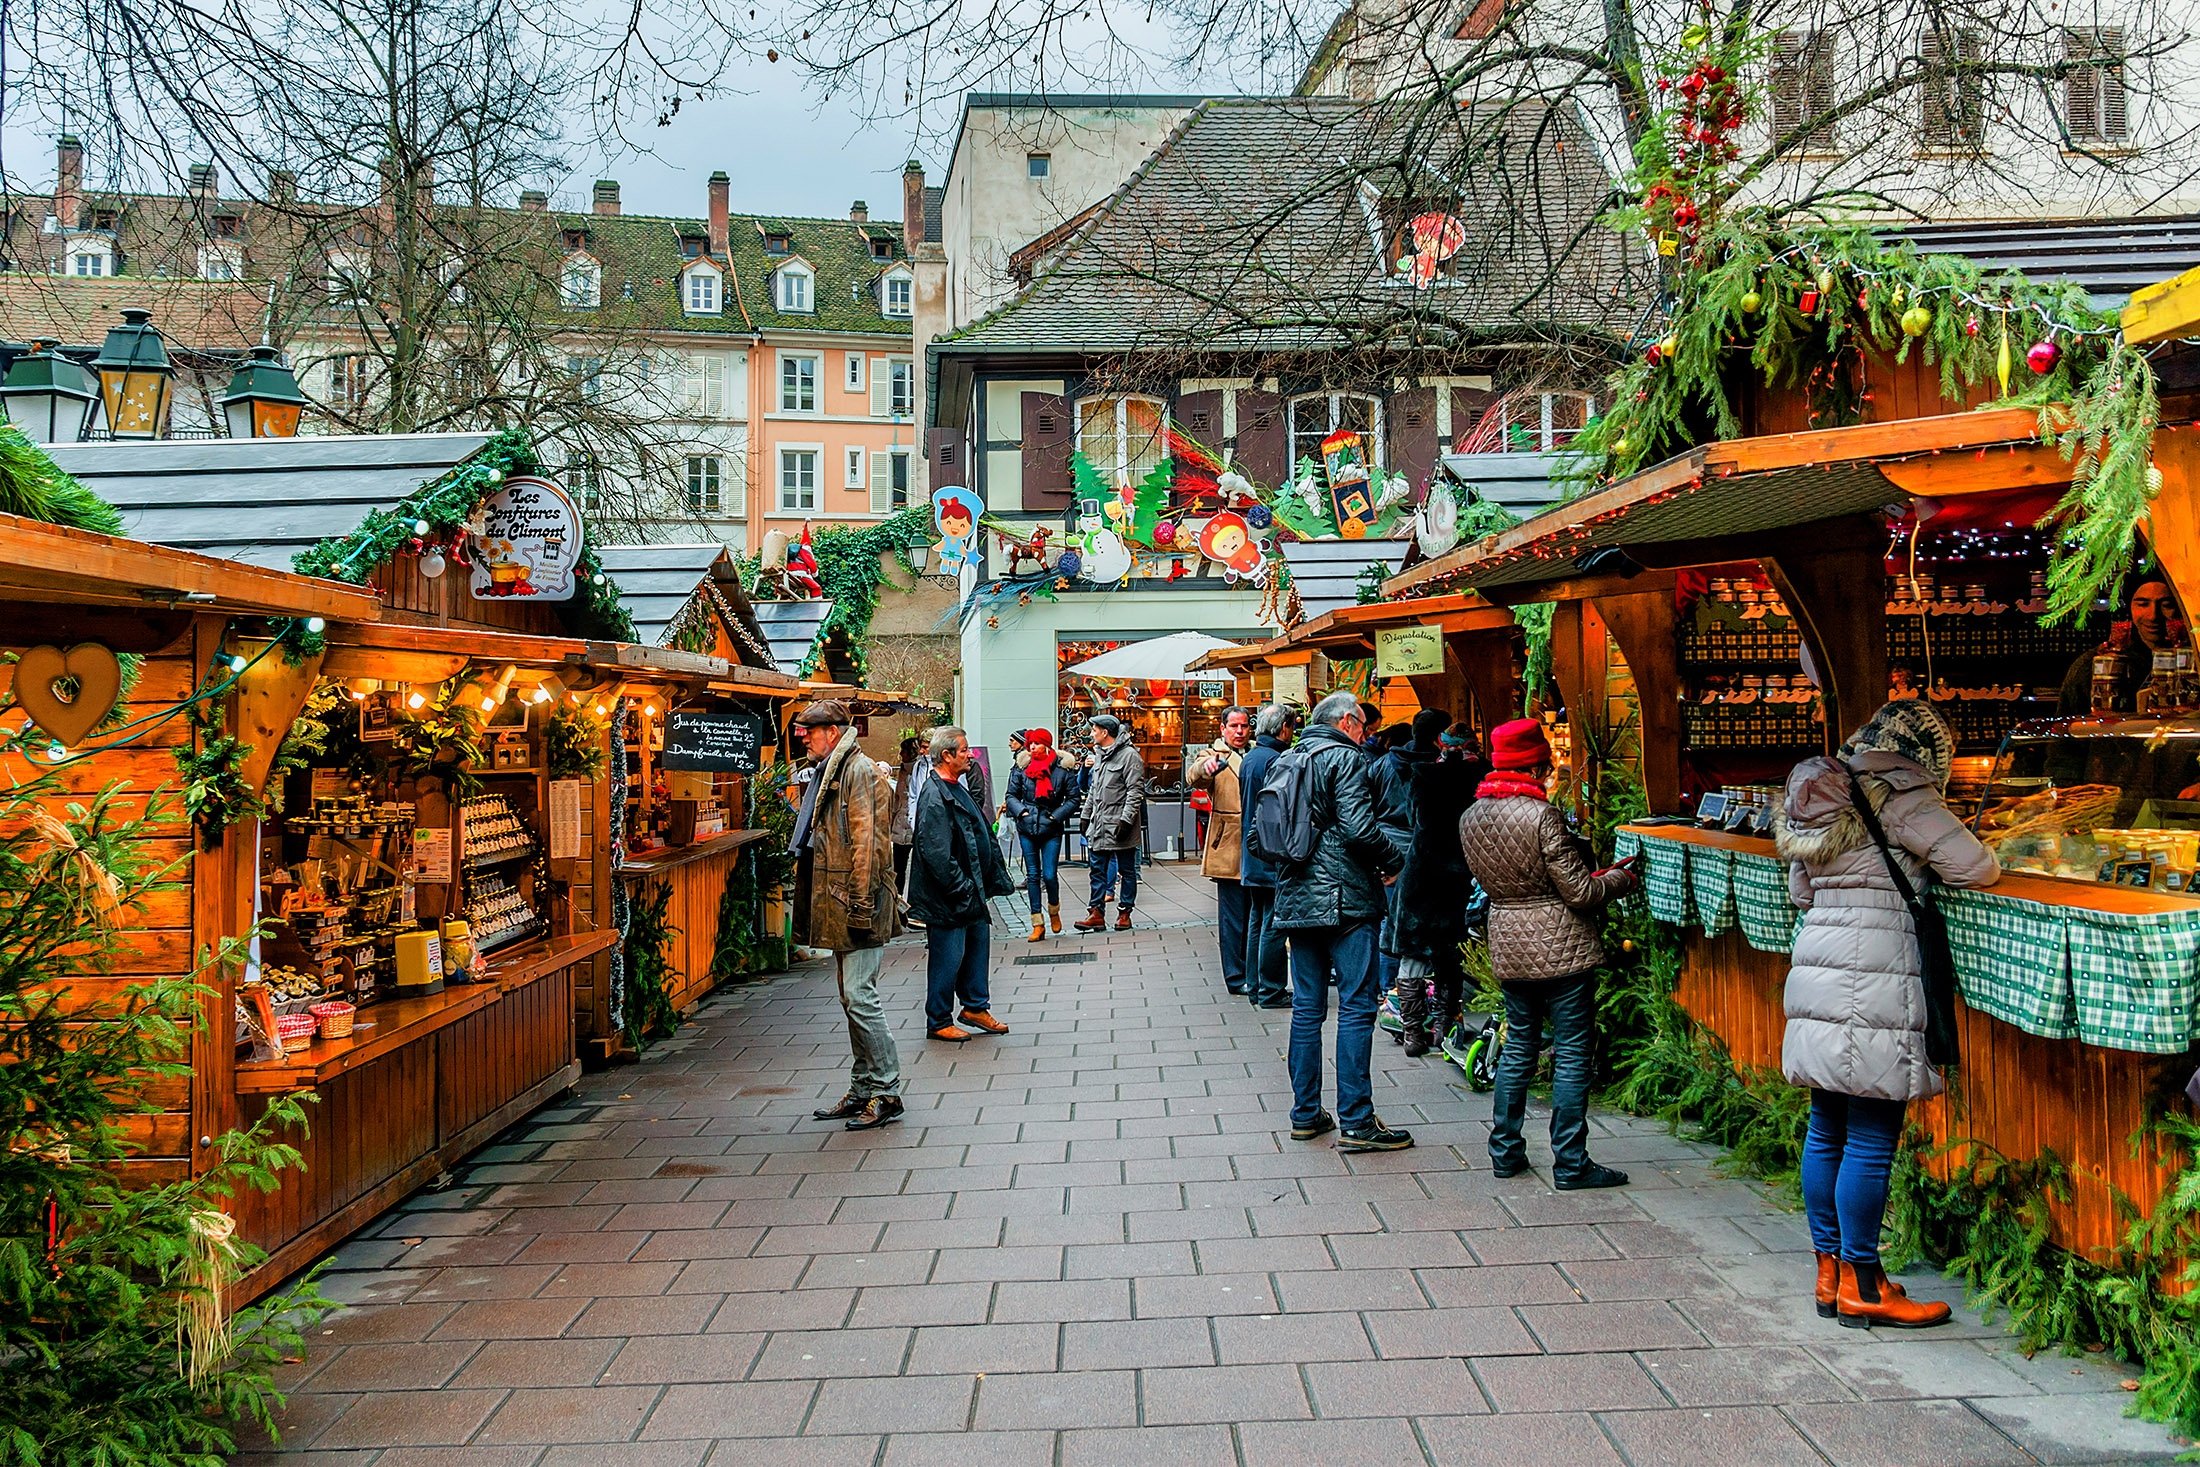 Colorful Christmas market in Strasbourg. Dec. 21, 2014. (Shutterstock Photo) 